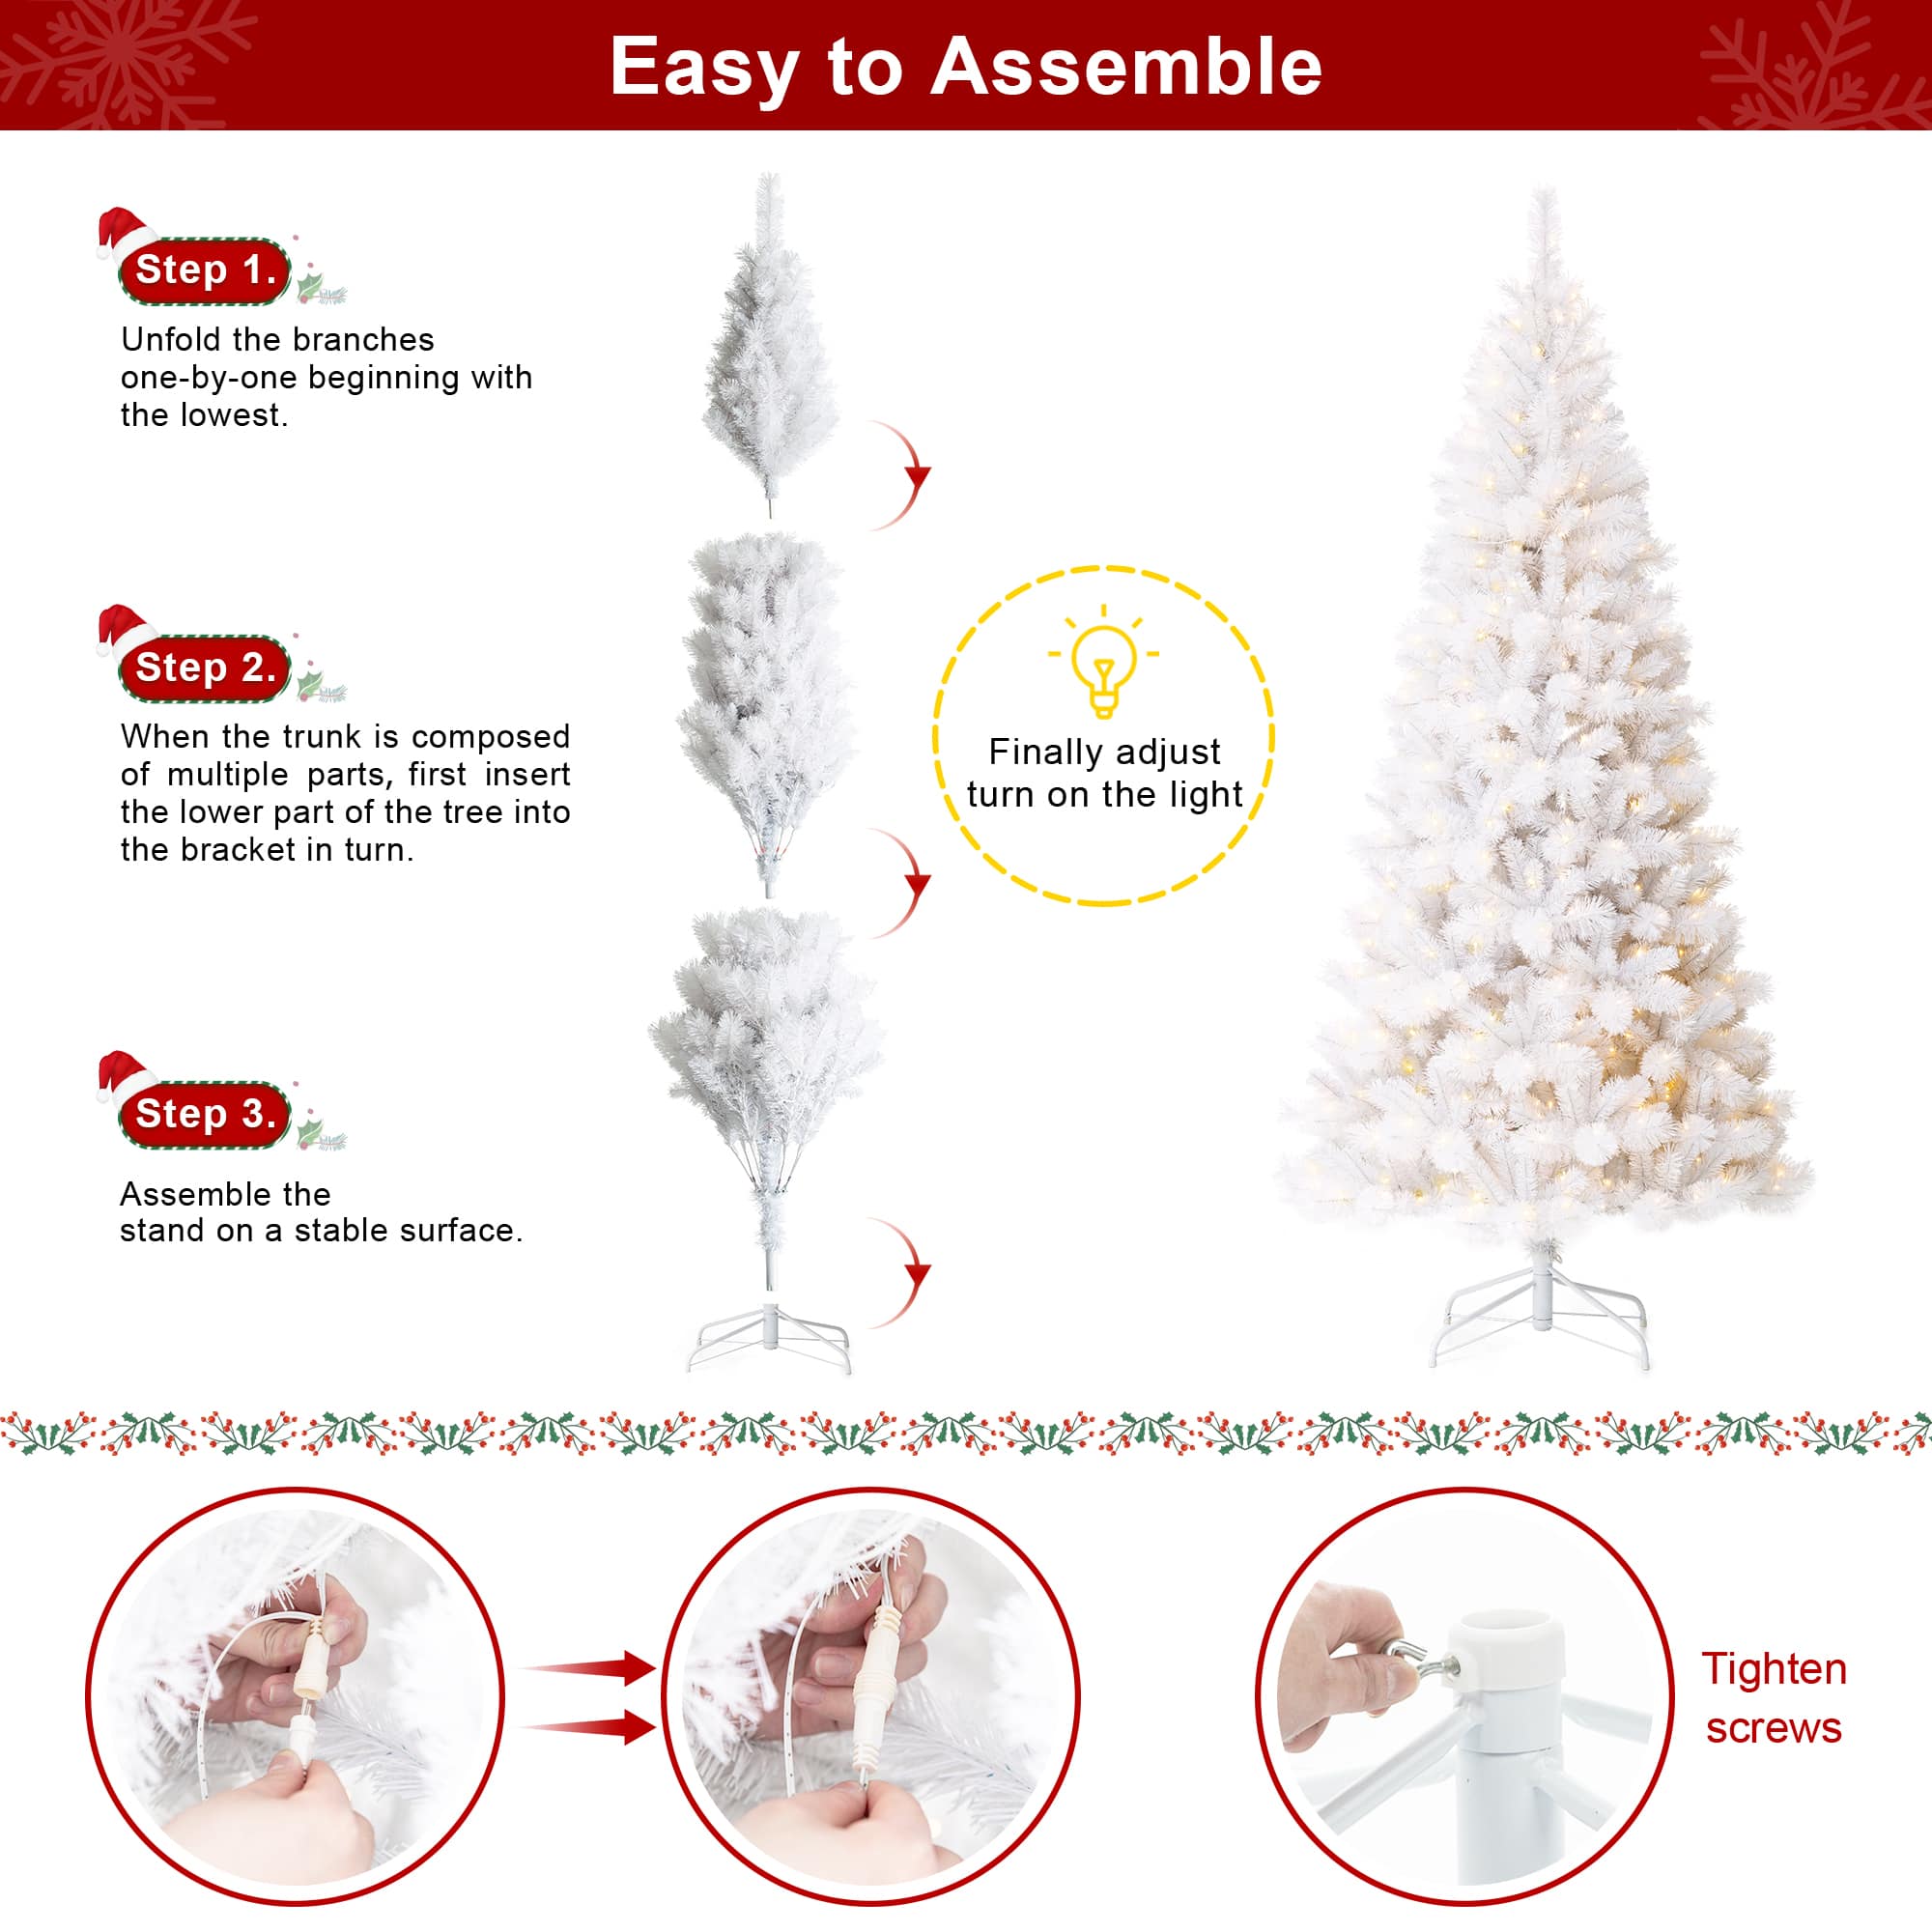 Glitzhome&#xAE; 8ft. Pre-Lit White Pine Artificial Christmas Tree, Warm White Lights